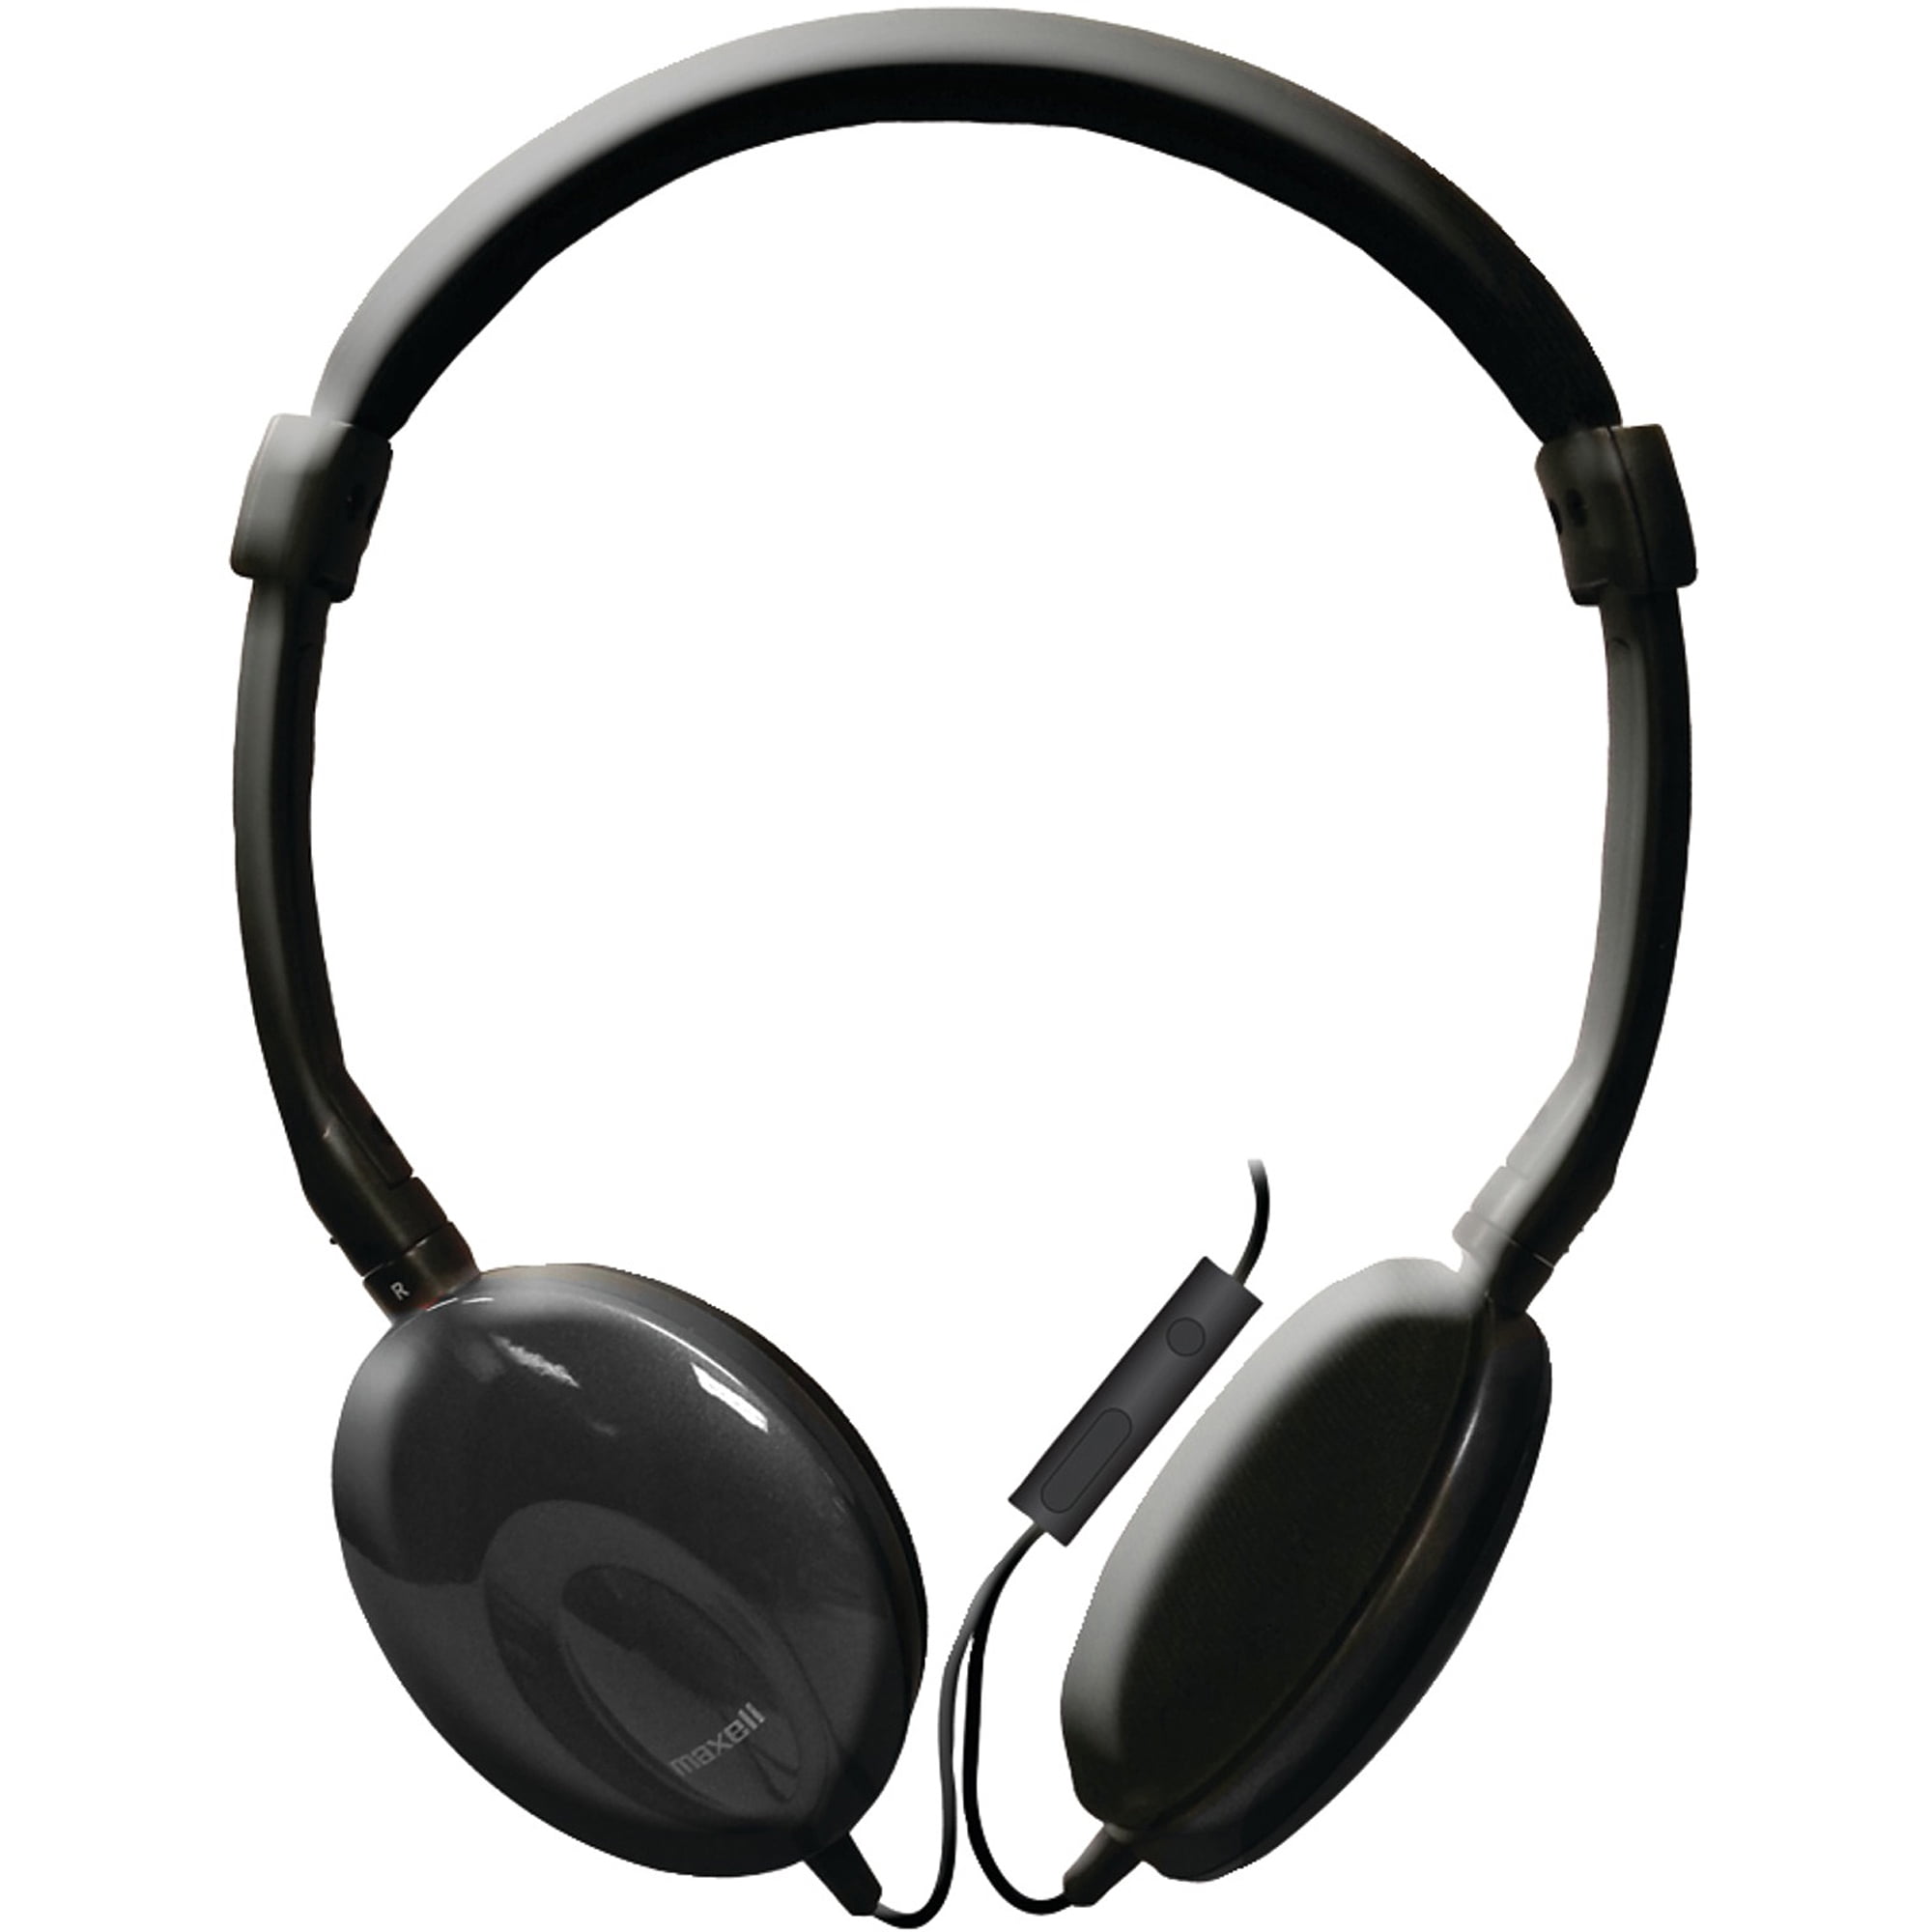 Maxell Classic Headphones with Microphone, Black - Walmart.com - Walmart.com